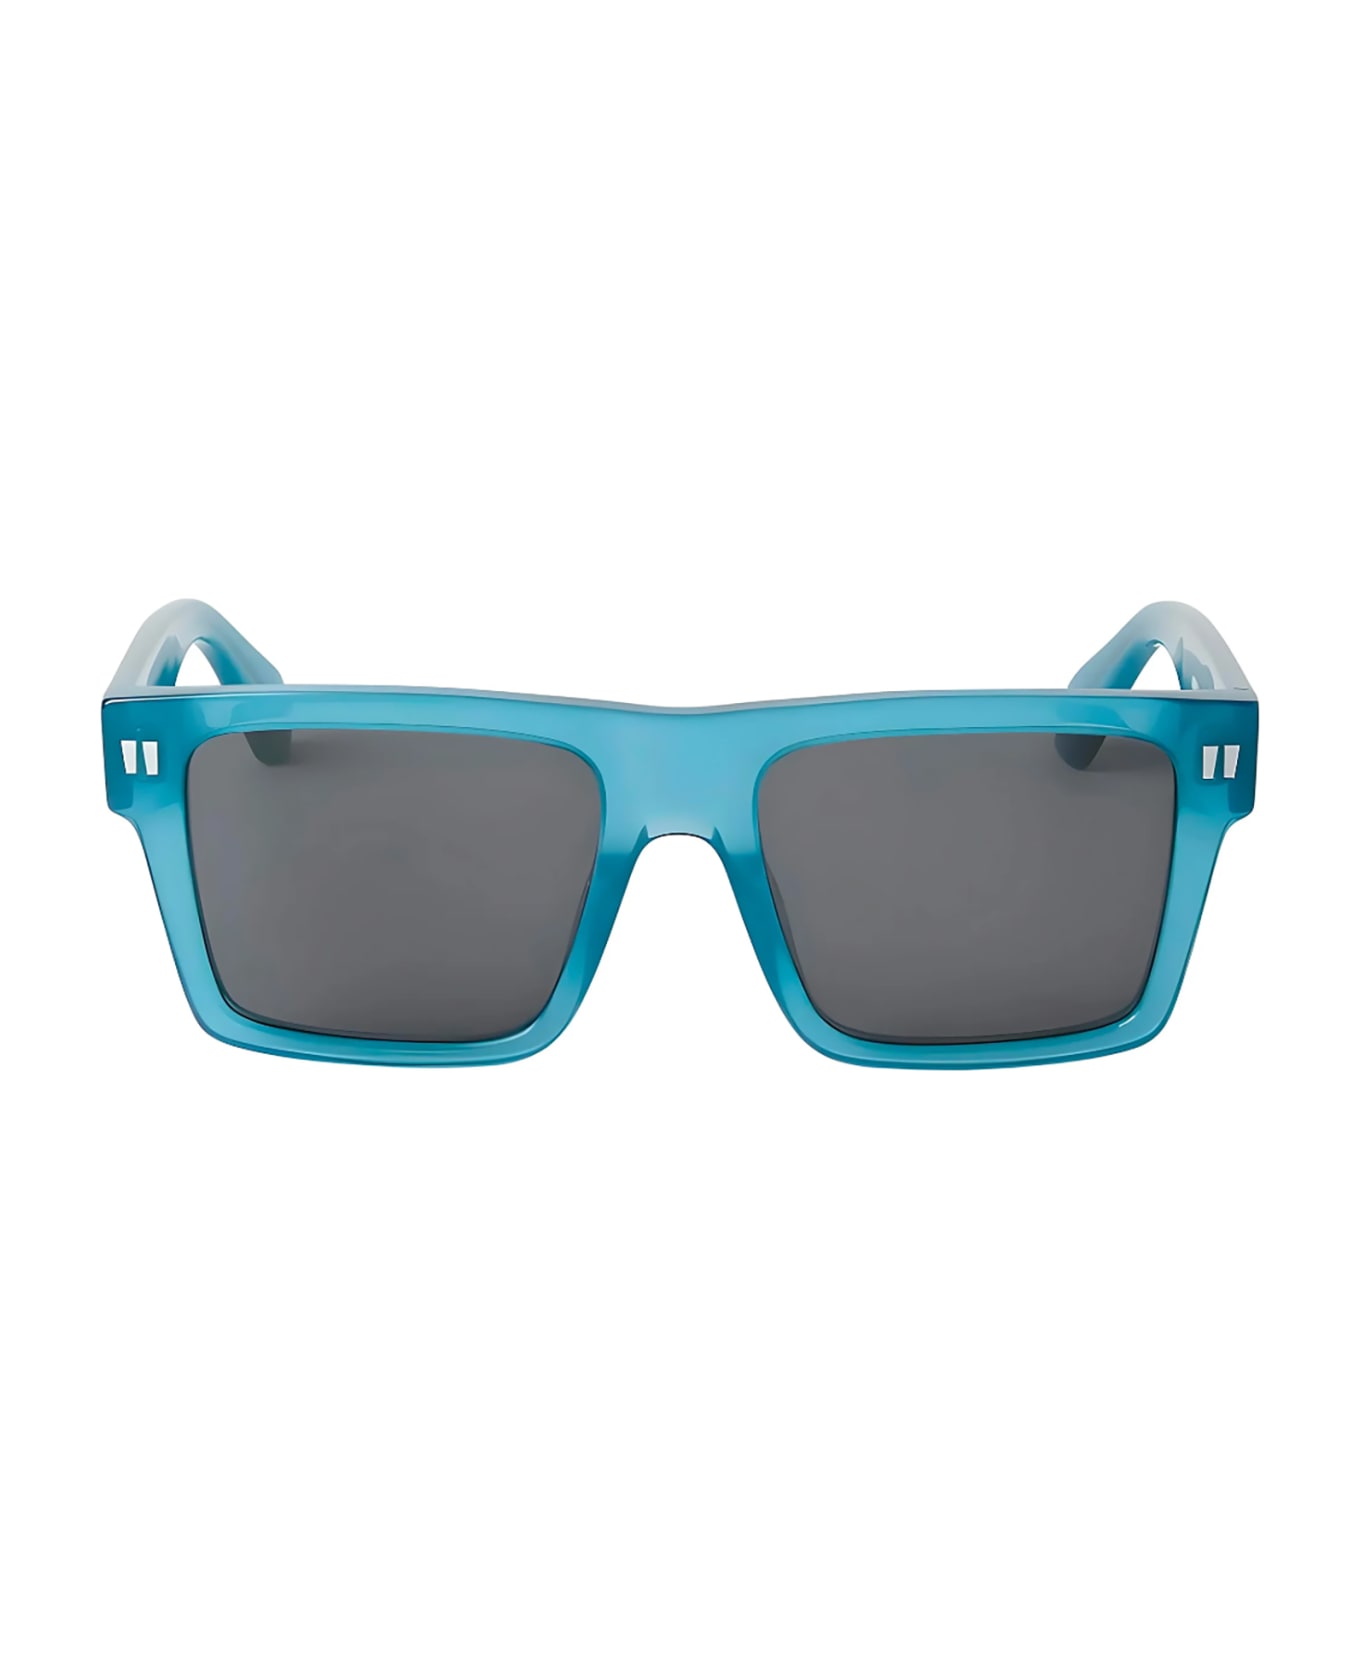 Off-White OERI109 LAWTON Sunglasses - Navy Blue サングラス